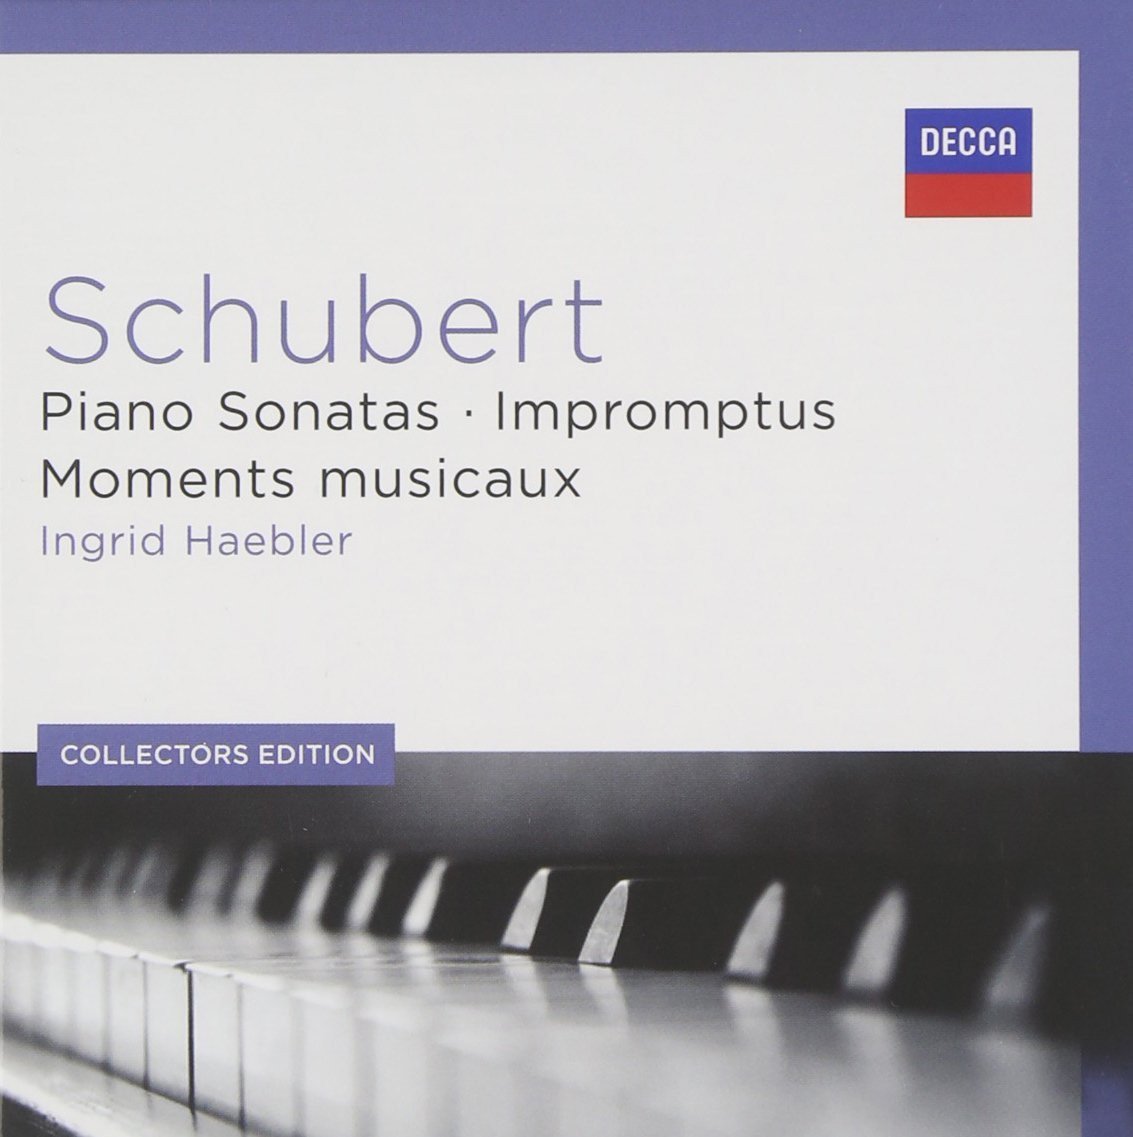 SCHUBERT: THE PIANO SONATAS - INGRID HAEBLER (7 CDS)